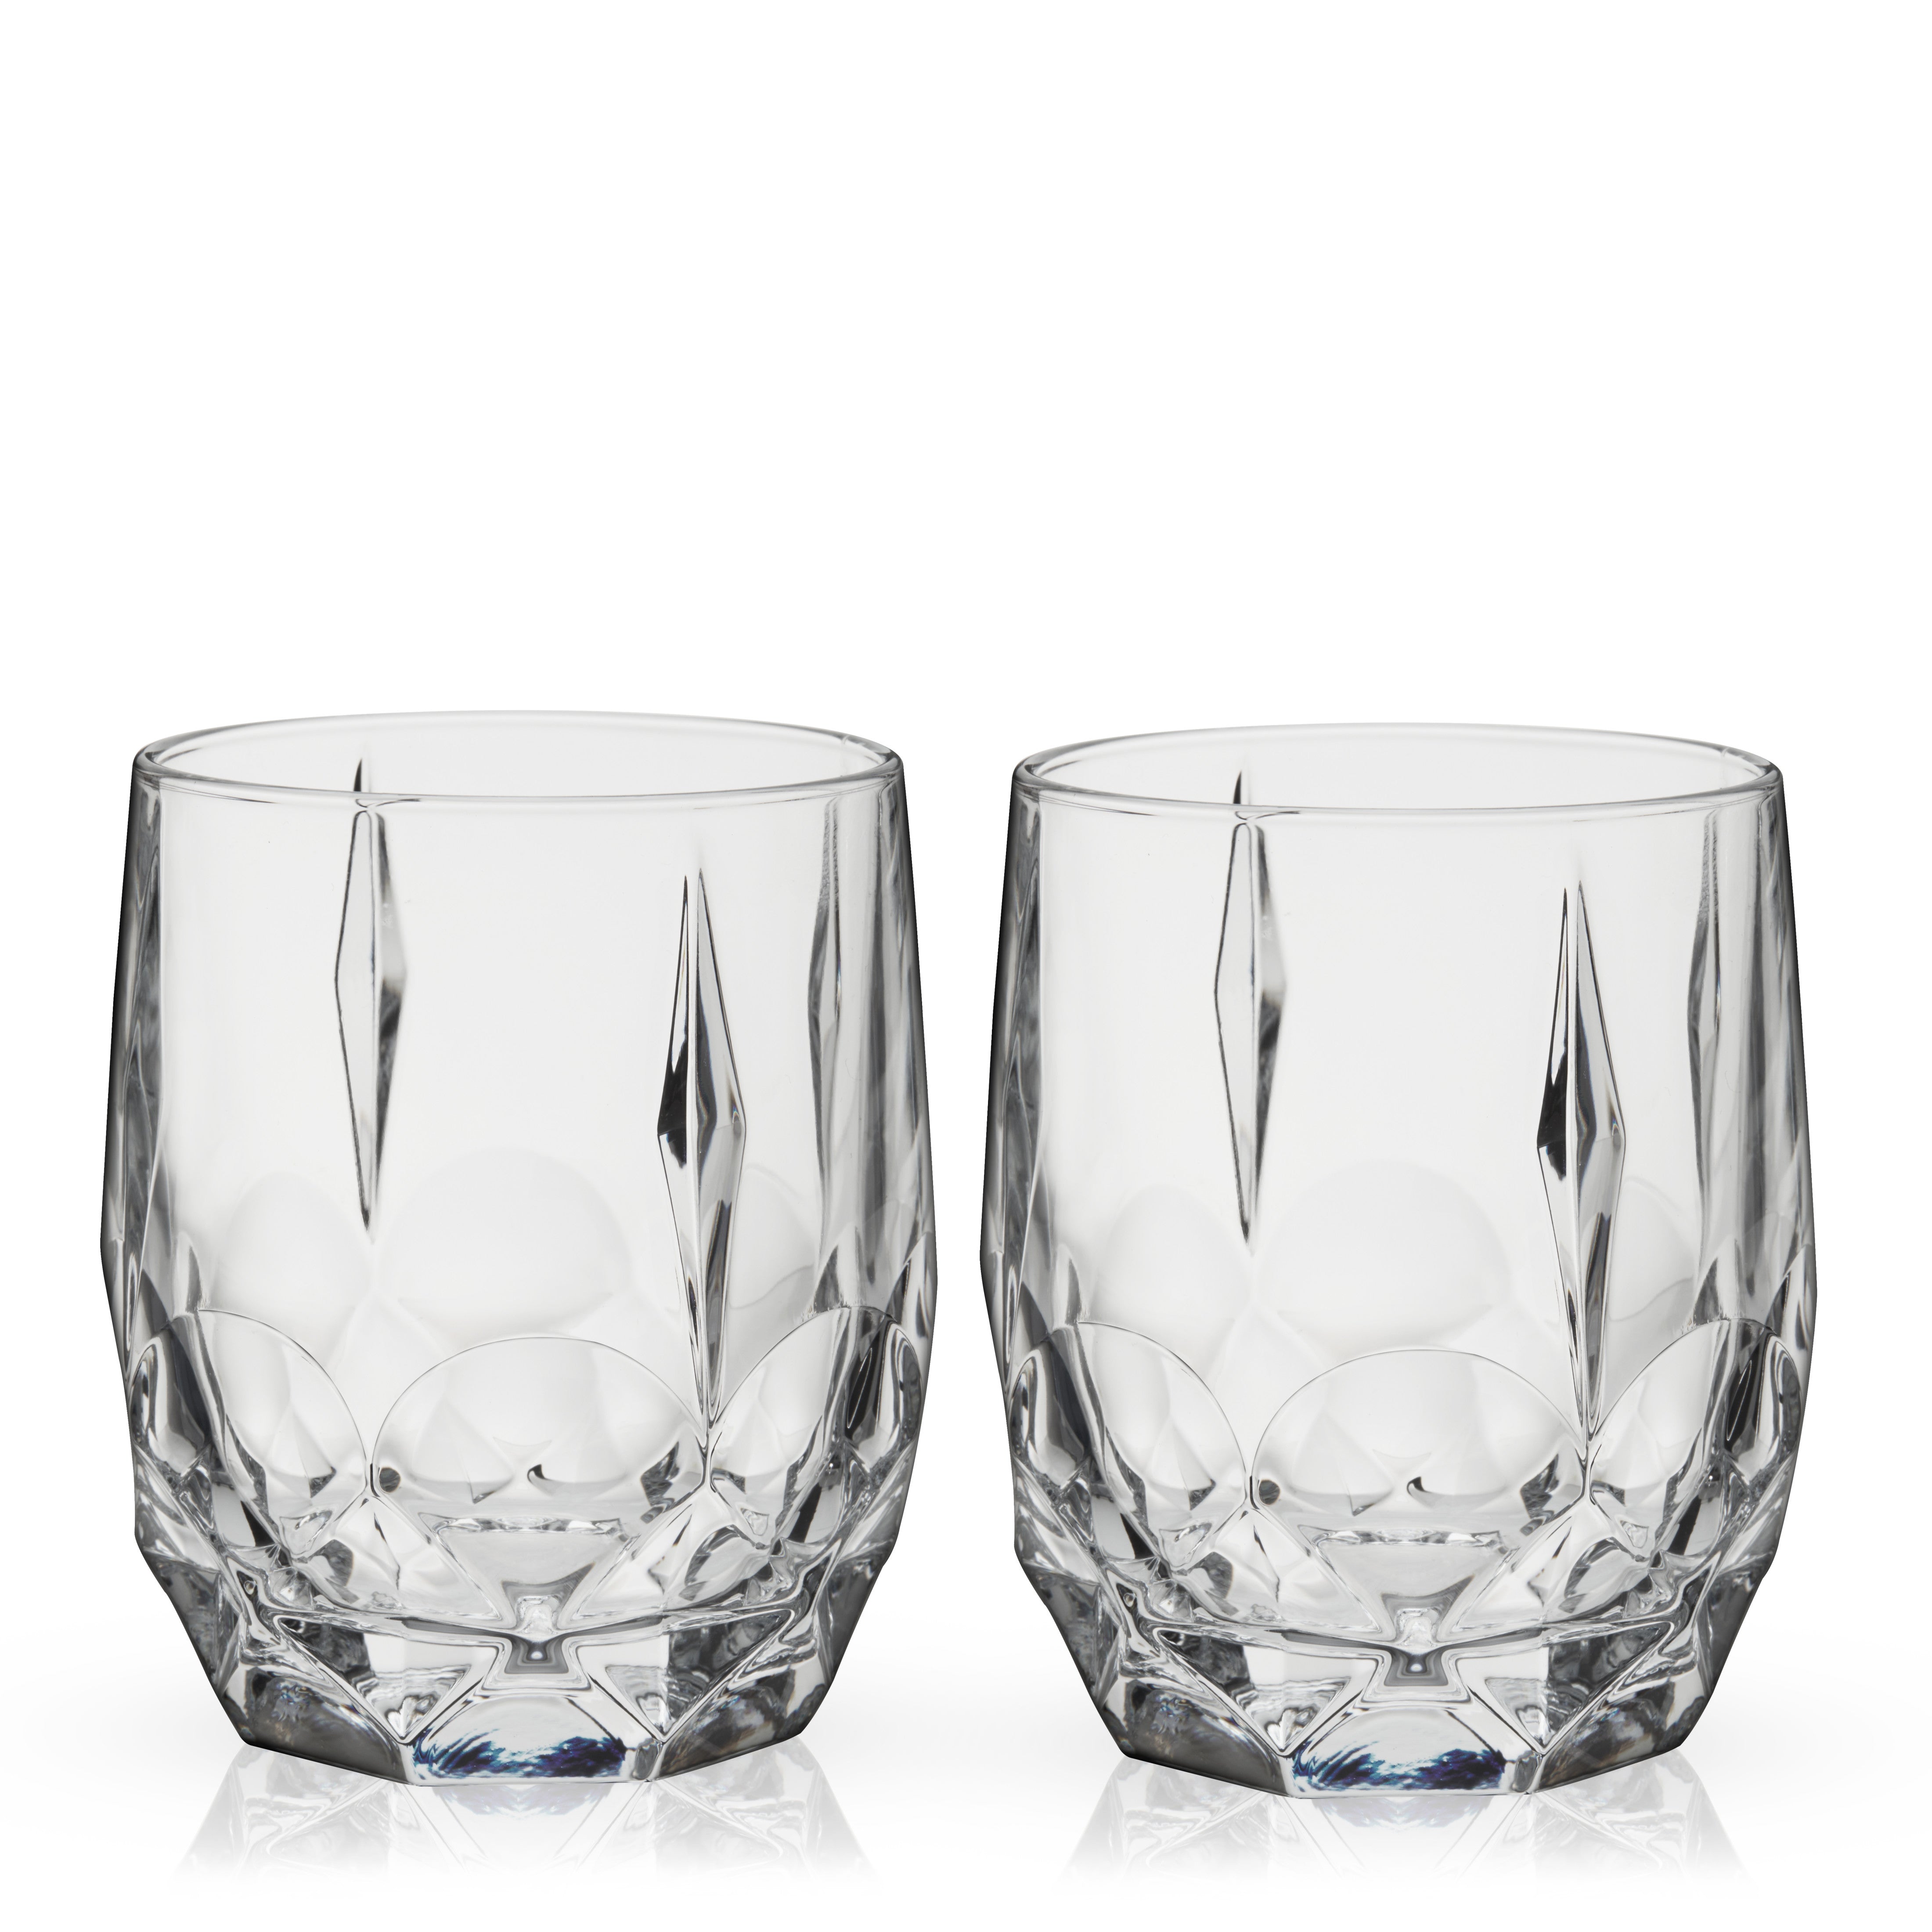 Viski Reserve Milo Crystal Rocks Glasses Old Fashioned Glass - European  Crafted Rocks Glasses, Bourbon Glass, Whiskey Glass and Liquor Gift Ideas  Set of 4